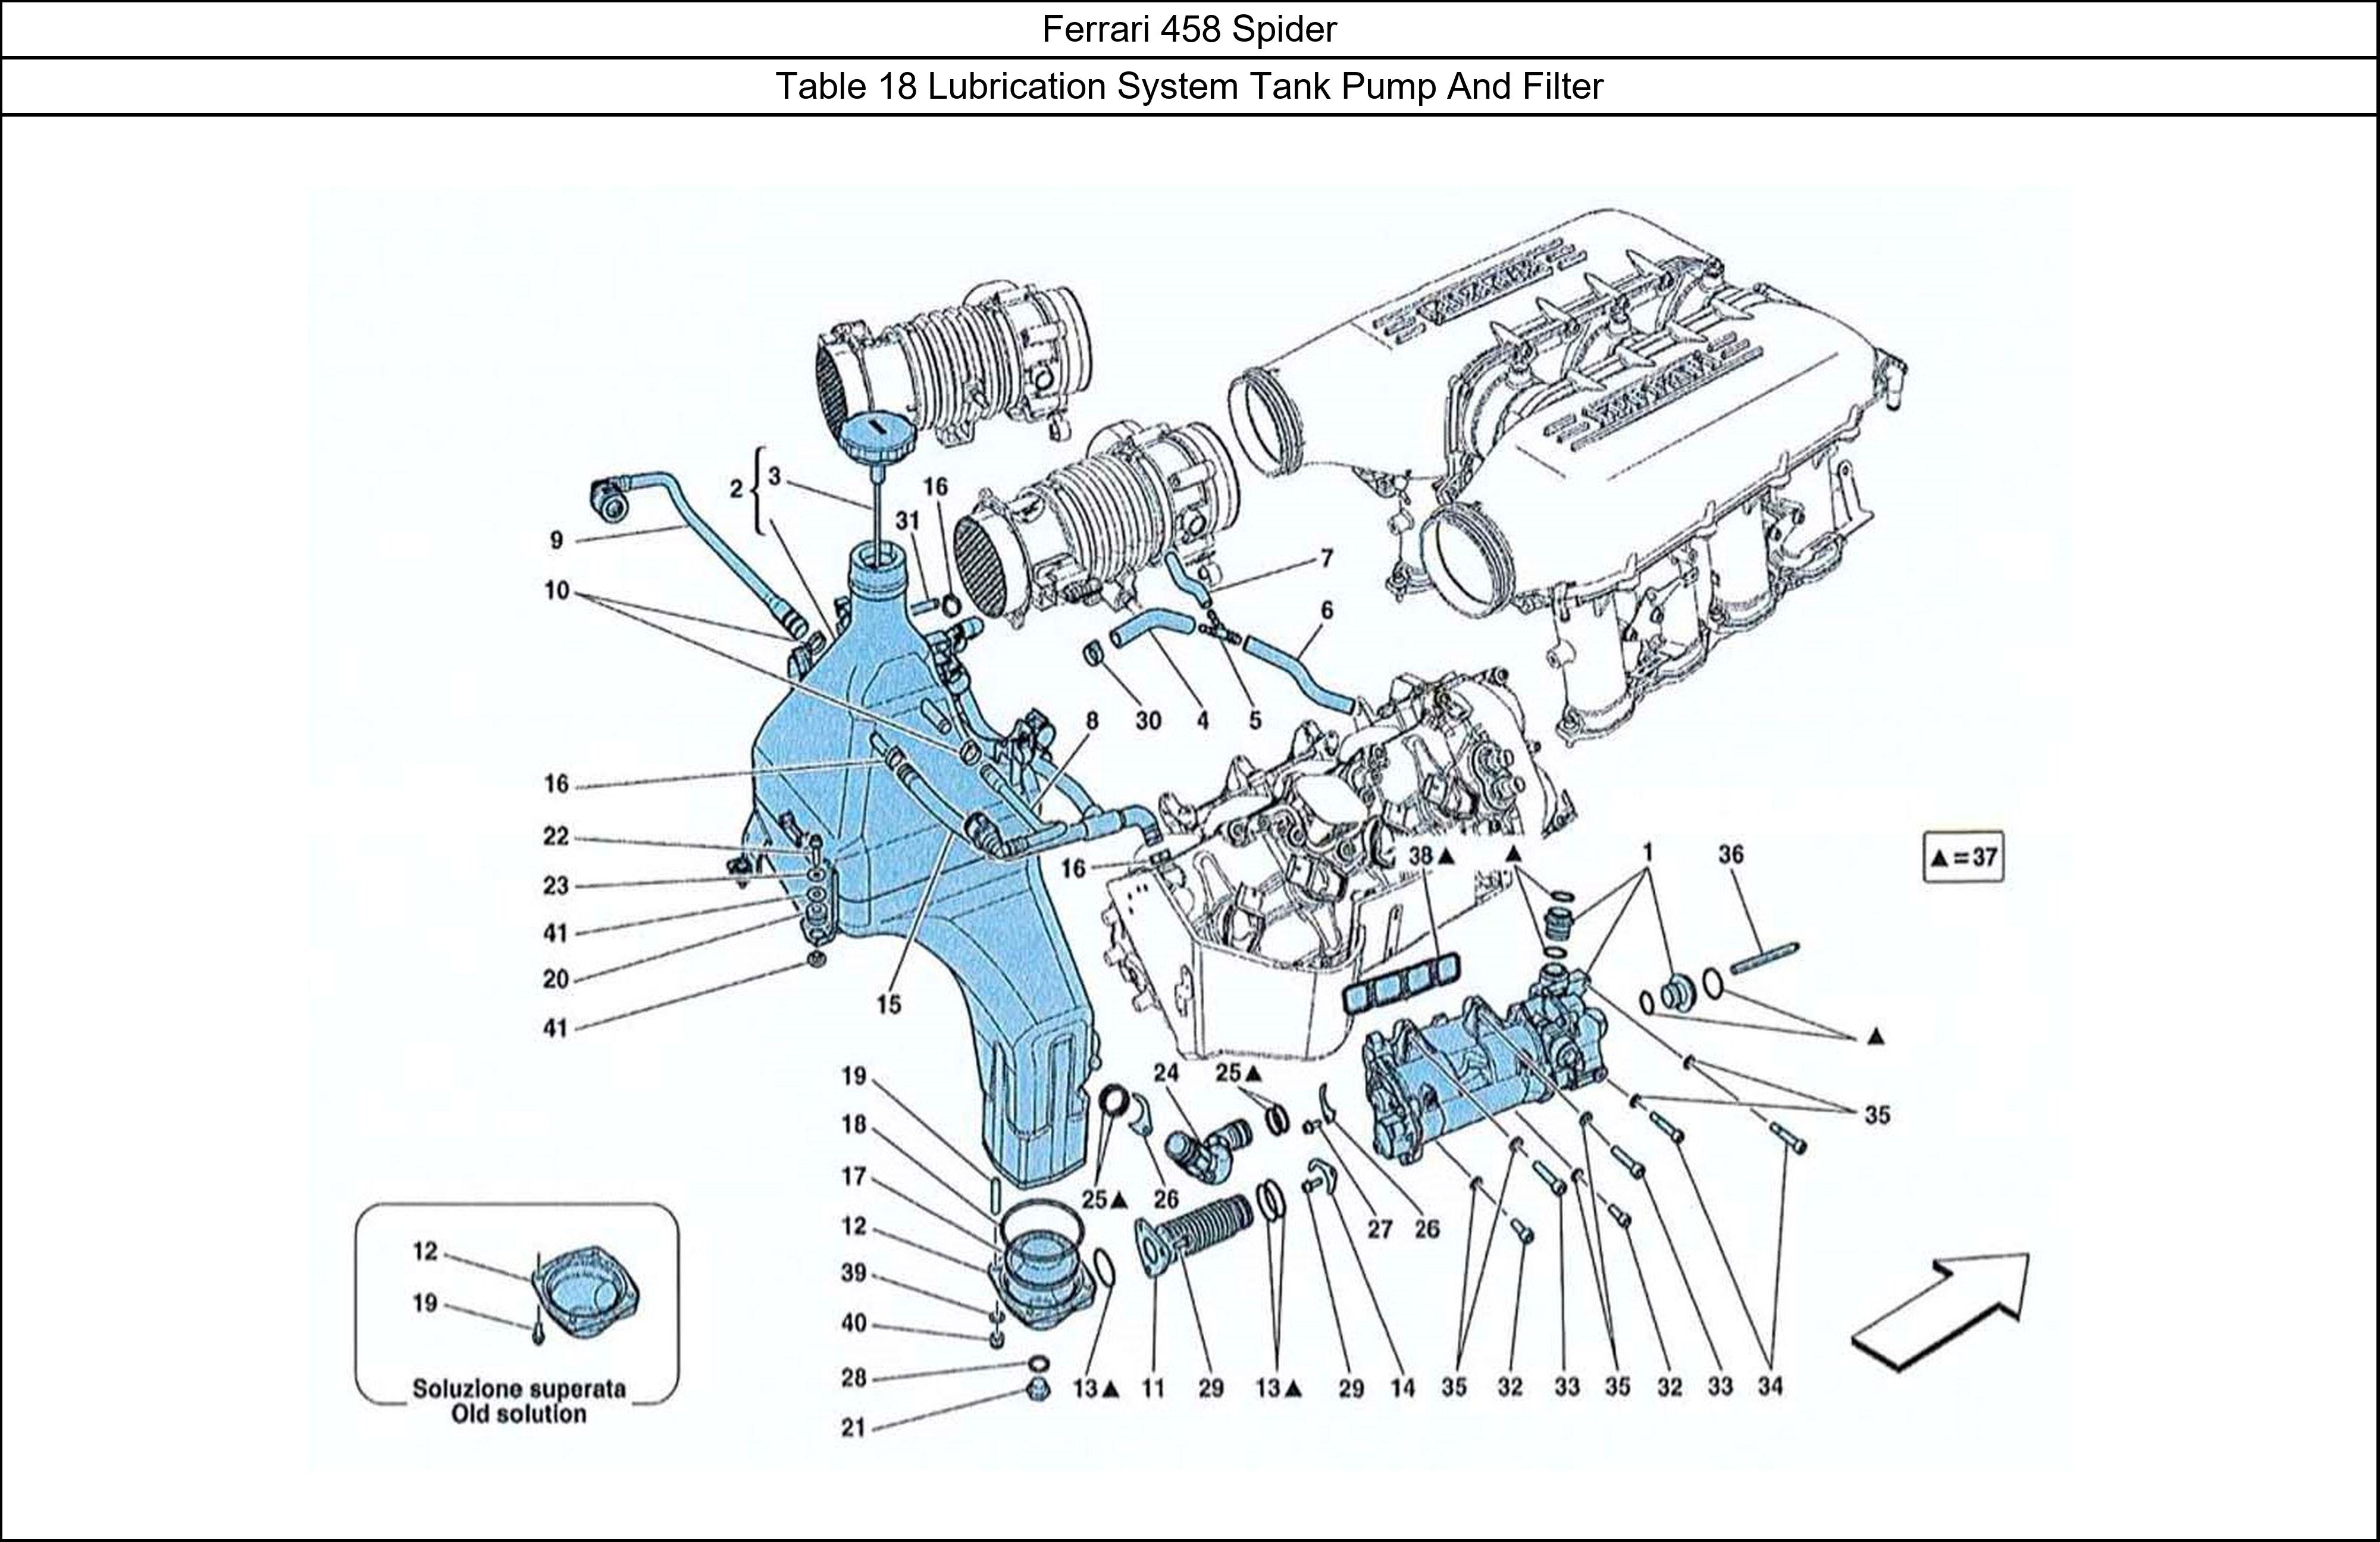 Ferrari Parts Ferrari 458 Spider Table 18 Lubrication System Tank Pump And Filter